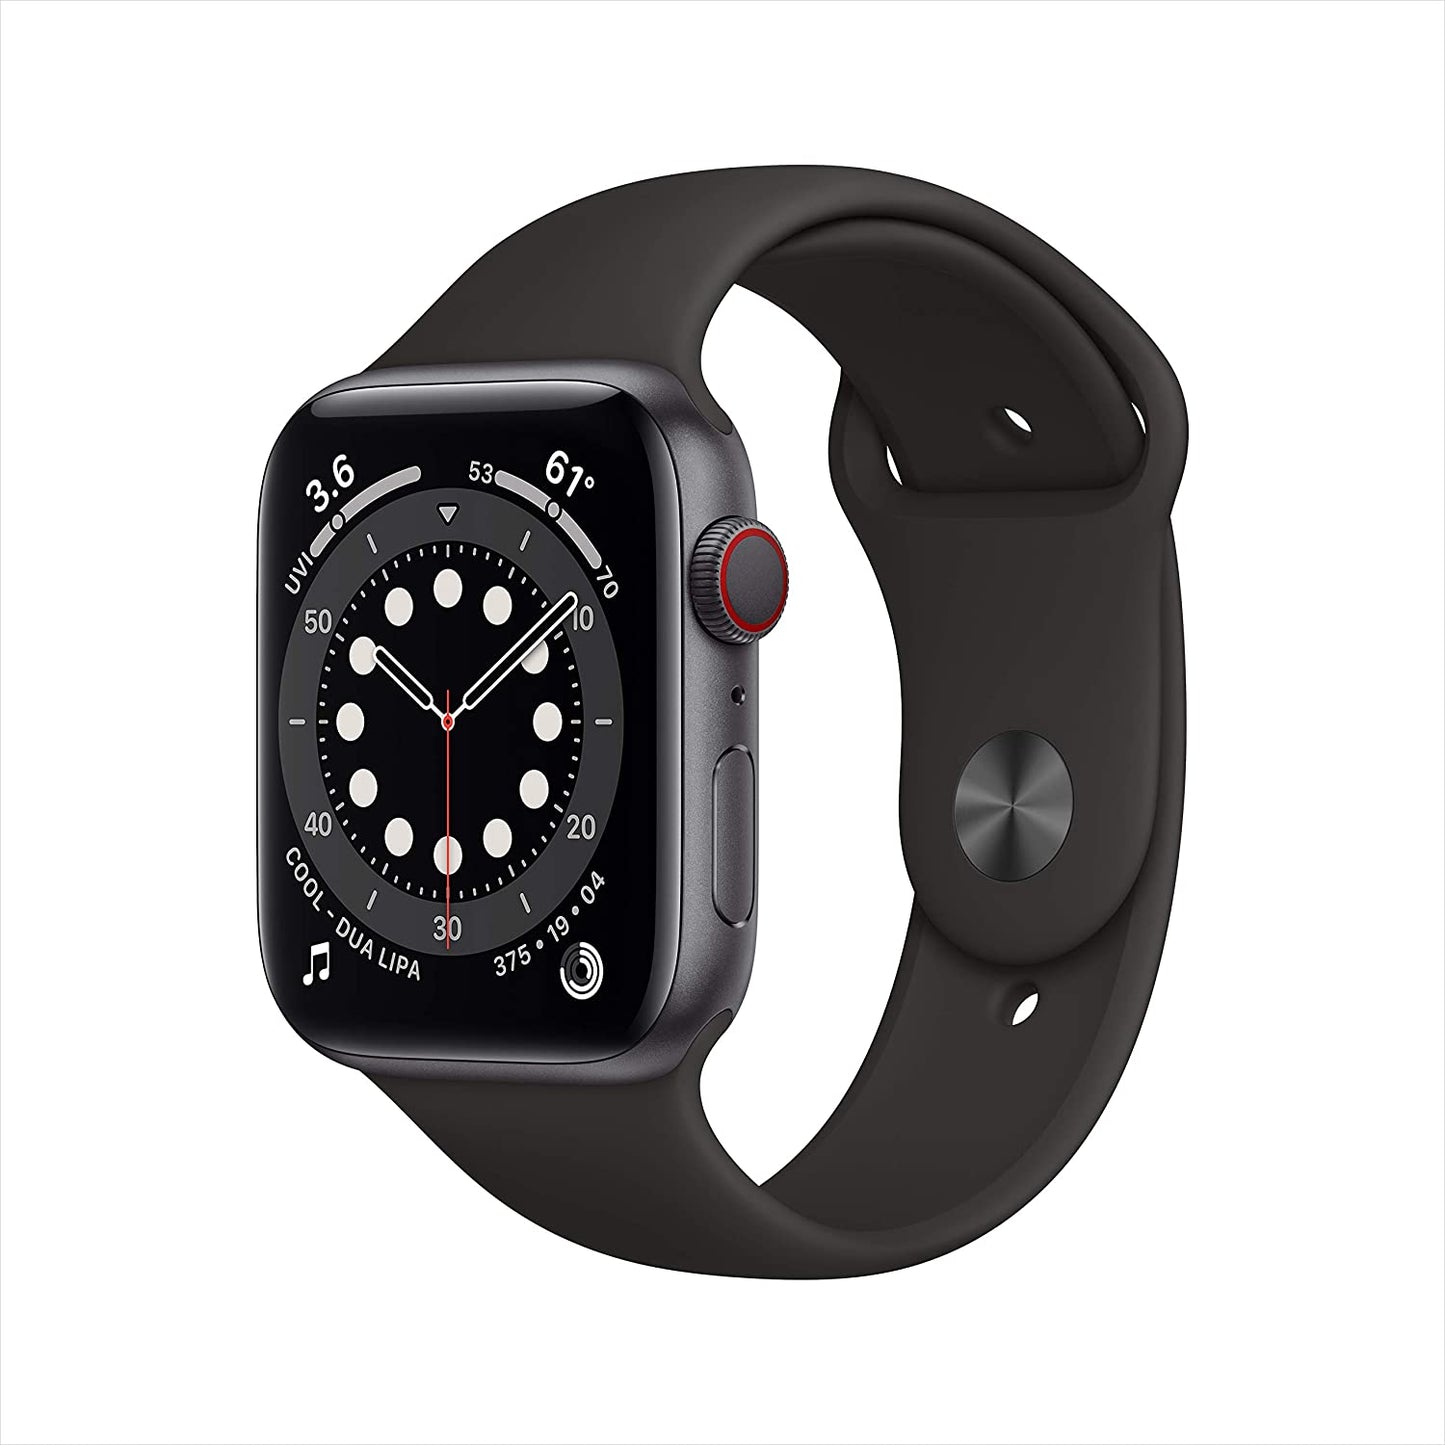 (Open Box) Apple Watch Series 6 GPS + Cellular 44mm Space Gray Aluminum w Black Sport Band